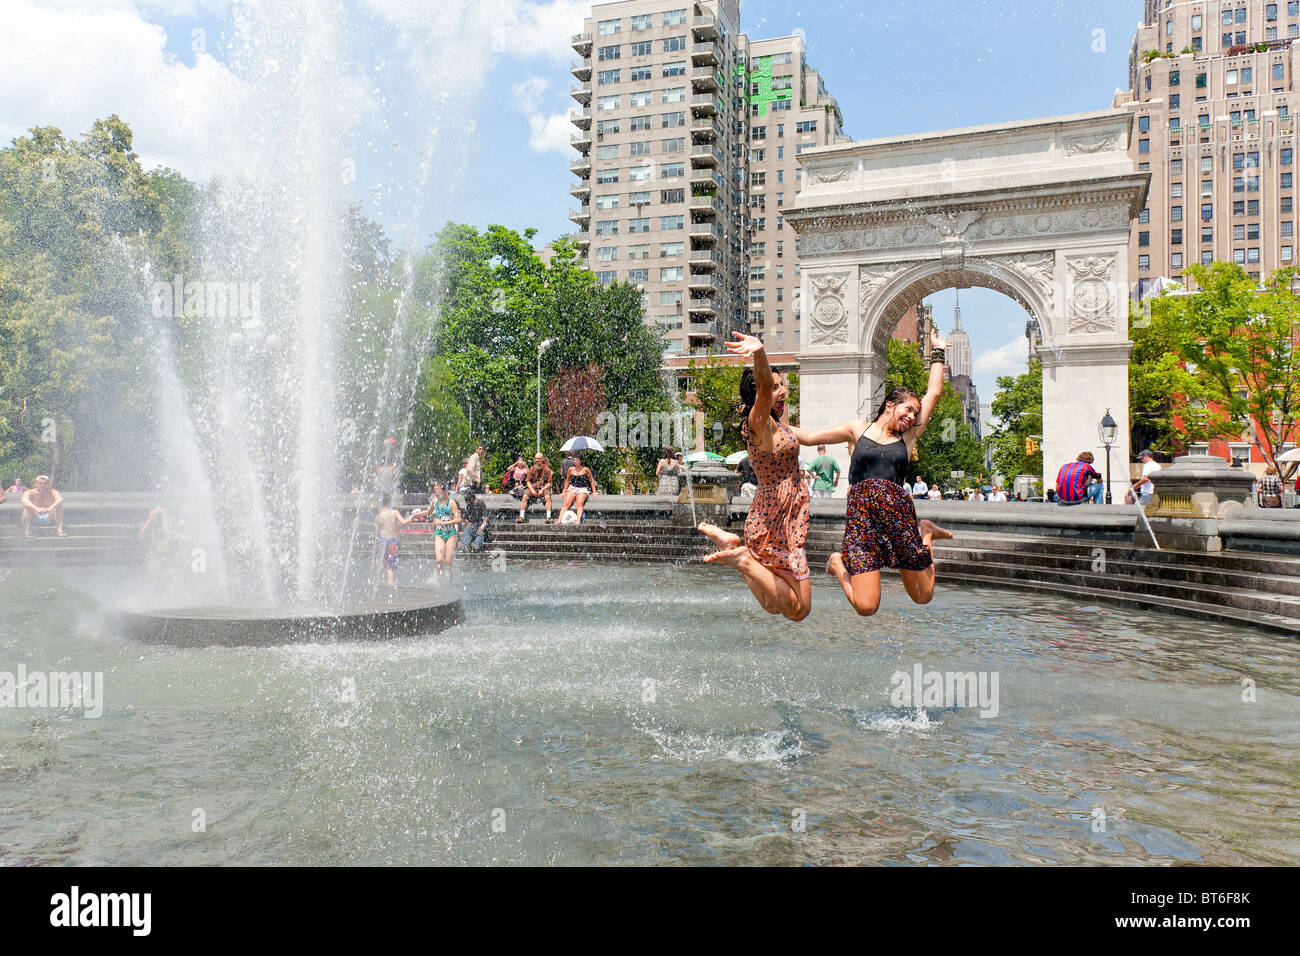 Washington Square Park Archway, New York City Stock Photo